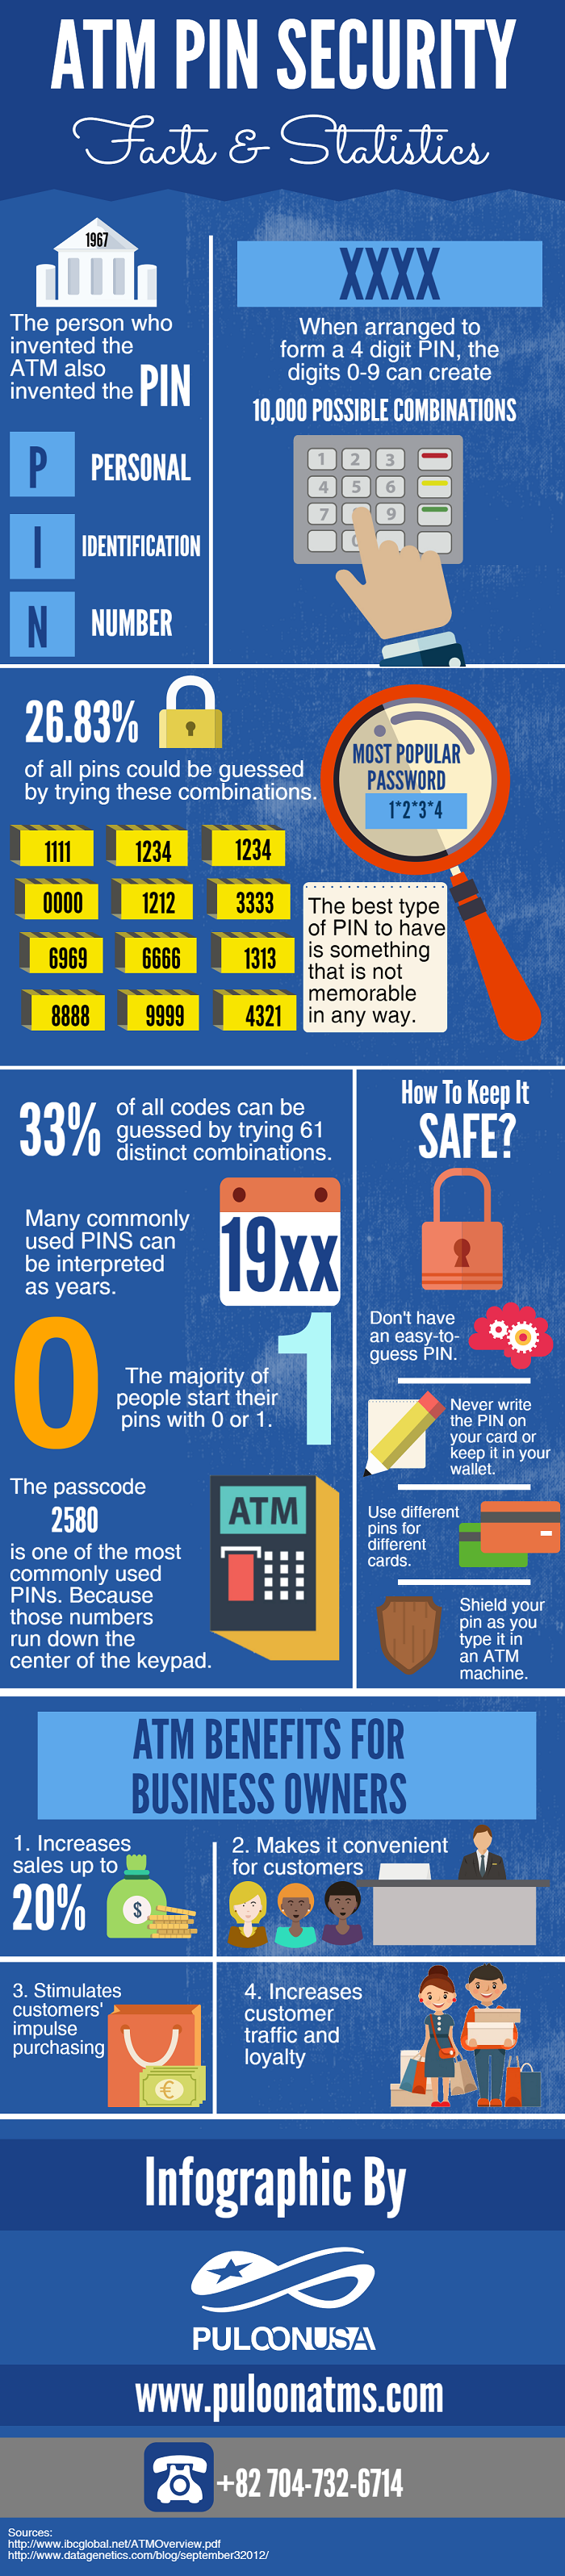 ATM PIN SECURITY Facts & Statidtics